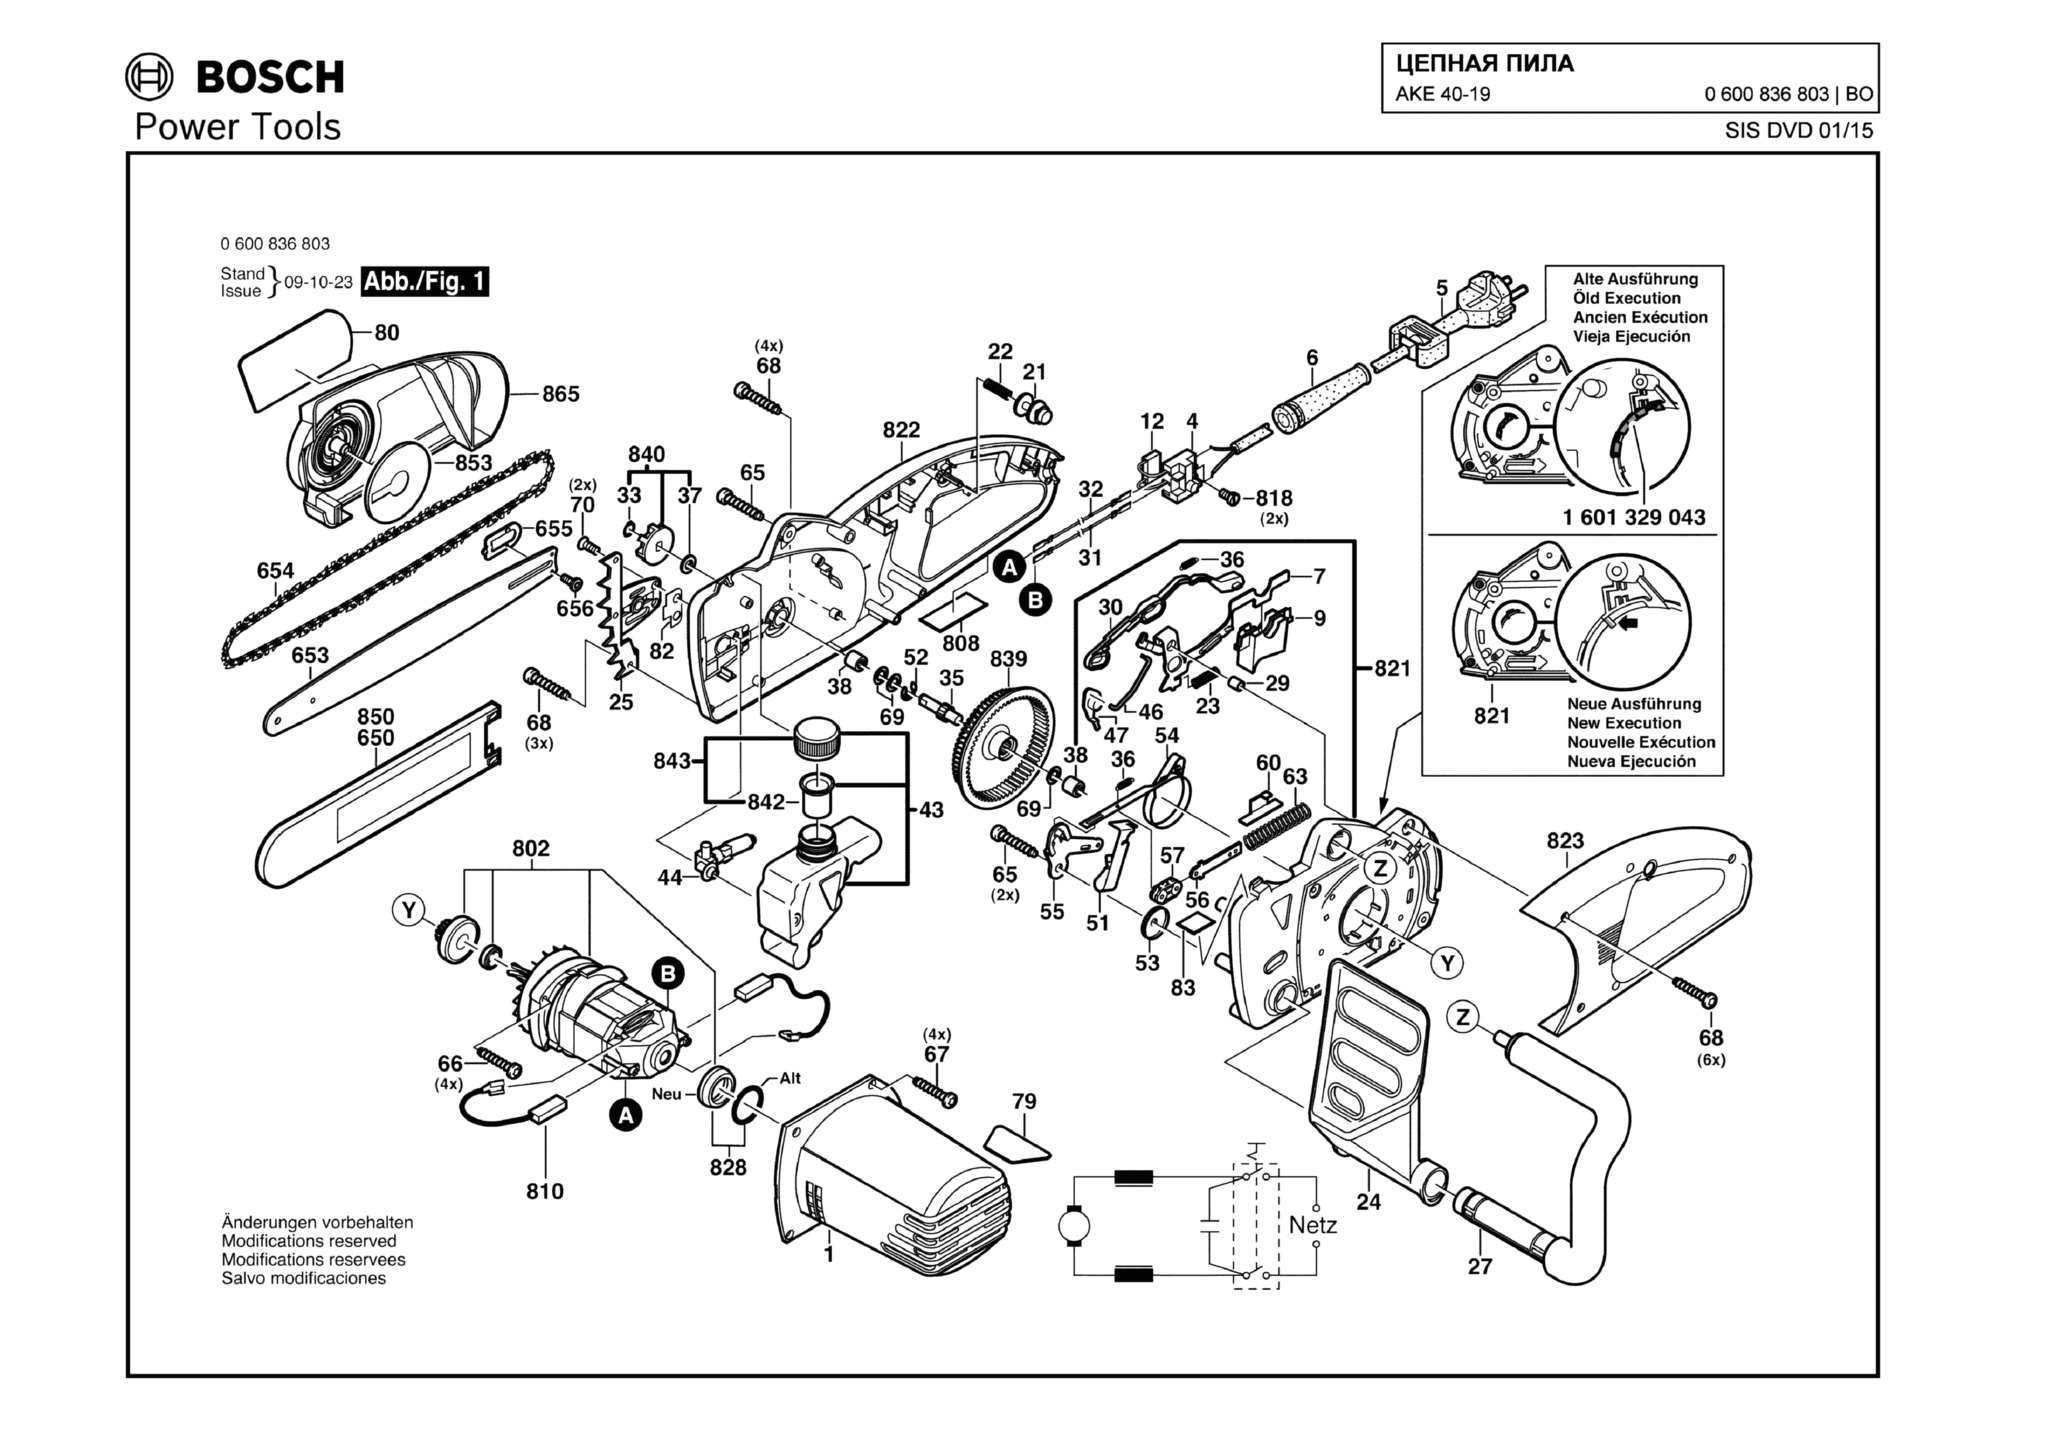 Запчасти, схема и деталировка Bosch AKE 40-19 (ТИП 0600836803)